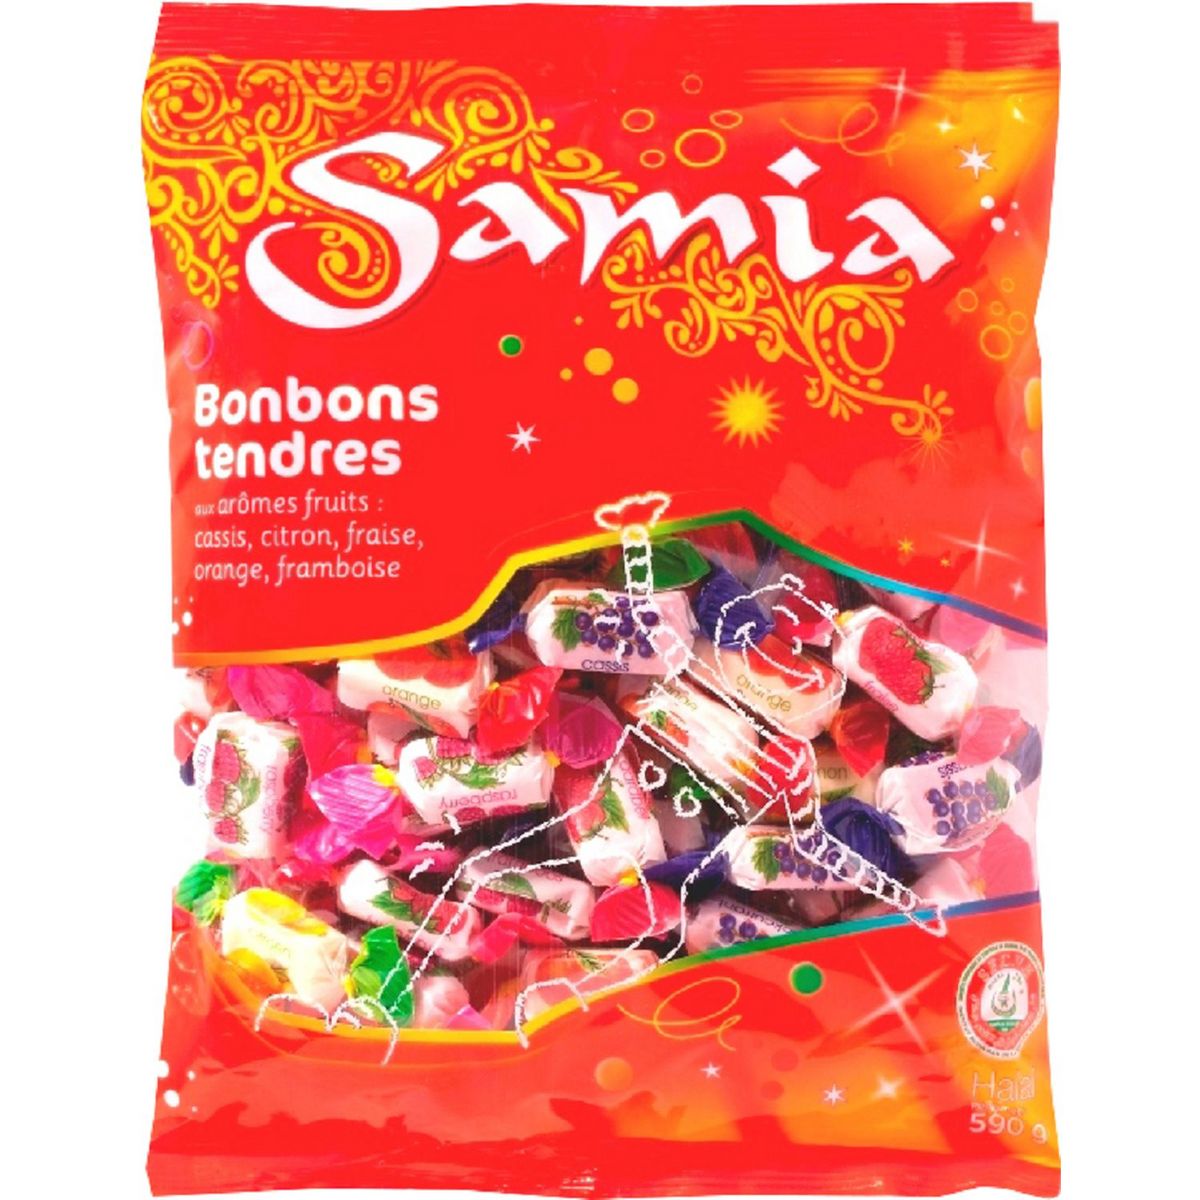 SAMIA Bonbons tendres halal 590g